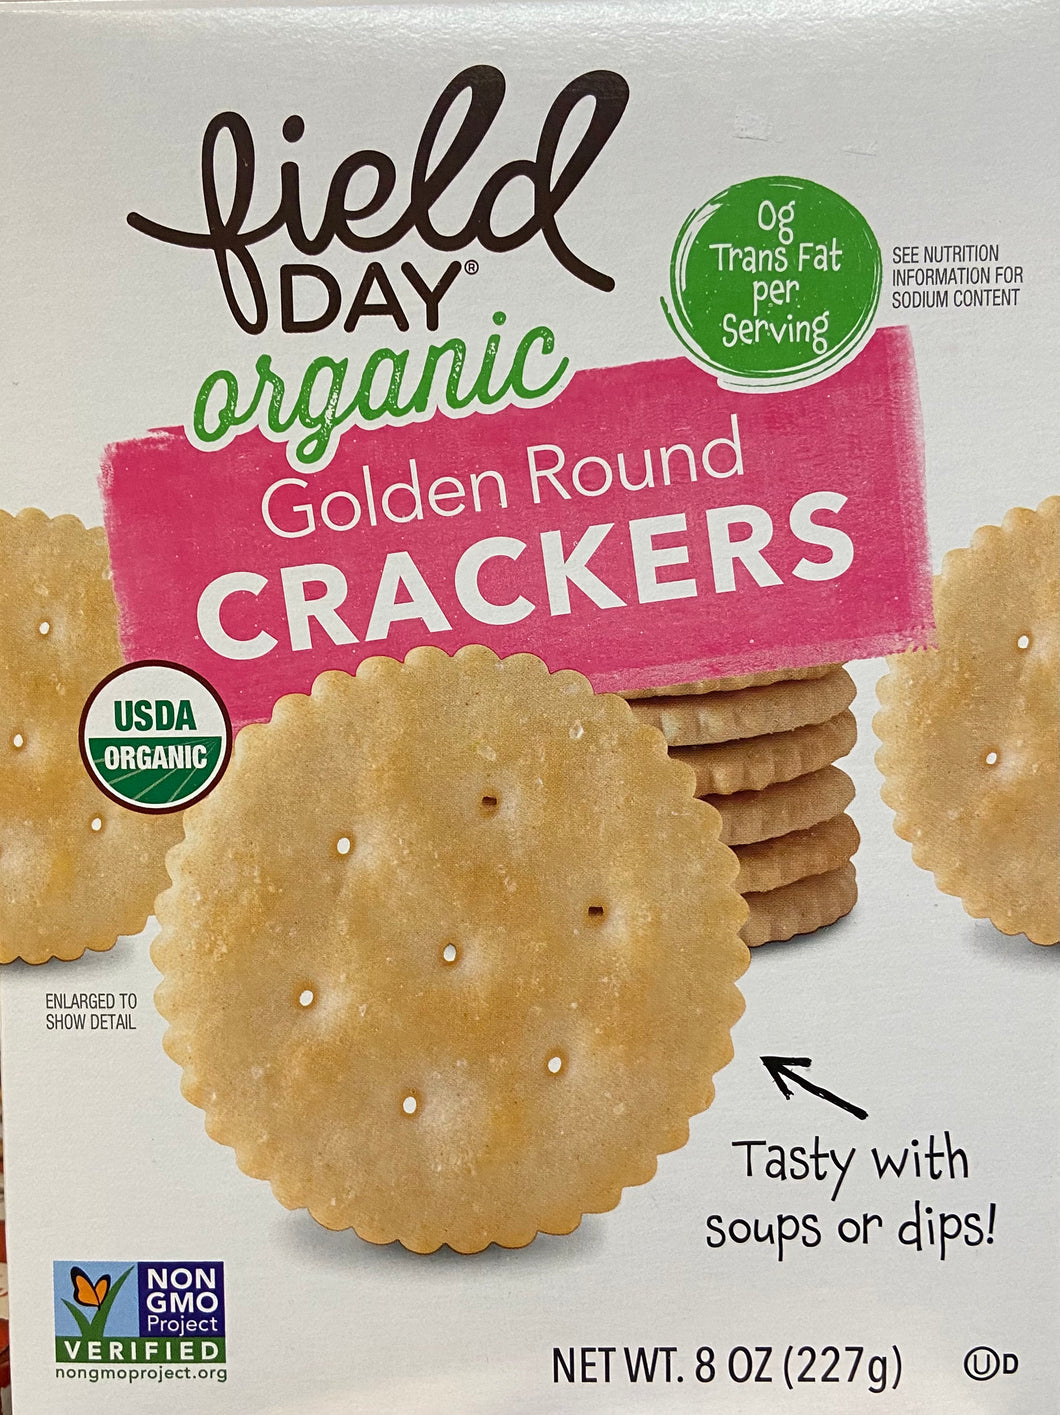 Crackers, Golden Round, Organic, Field Day